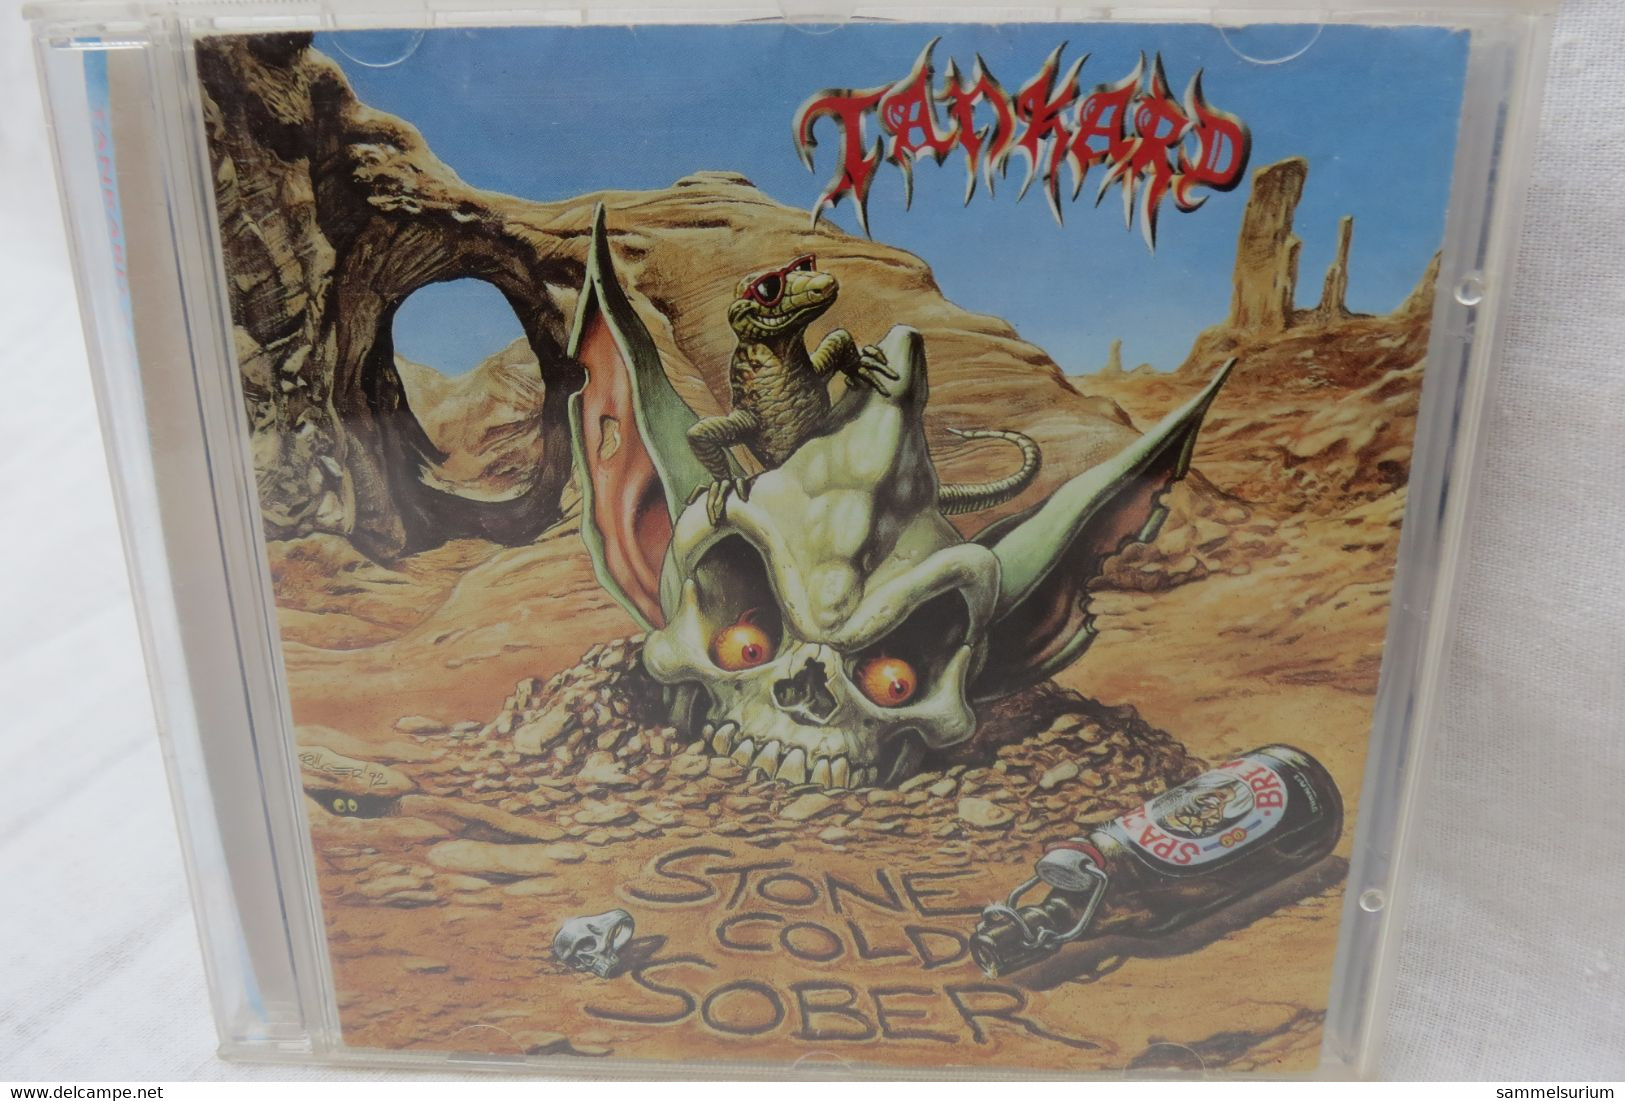 CD "Tankard" Stone Cold Sober - Hard Rock & Metal